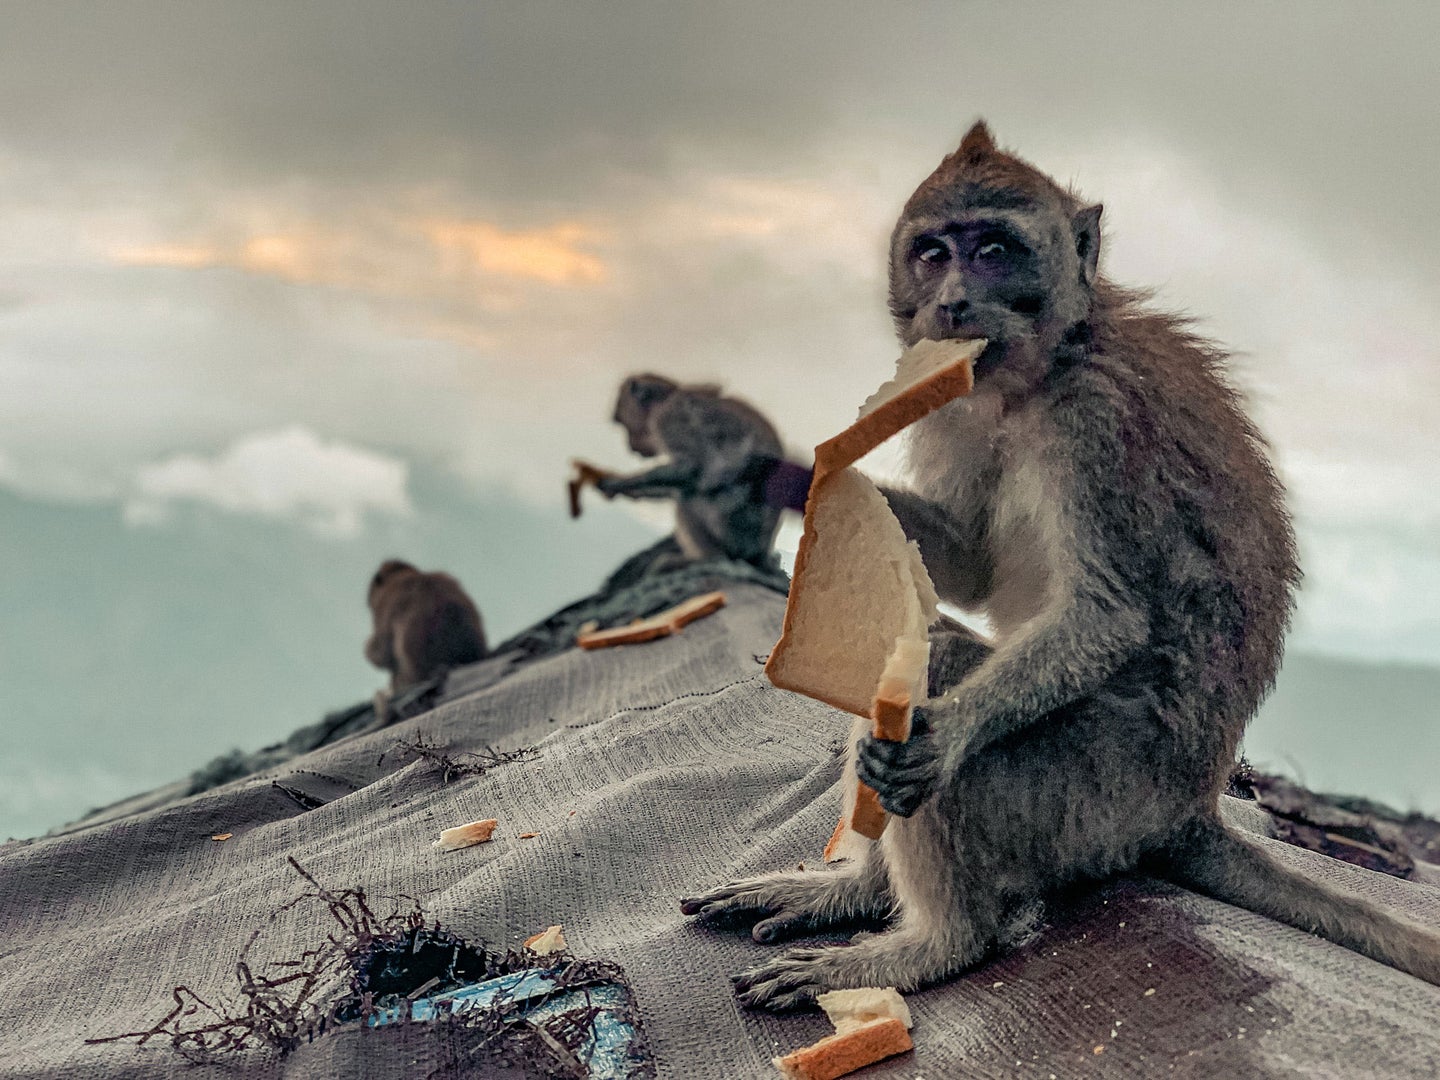 monkeys on rooftop eating bread picfair urban wildlife photo awards